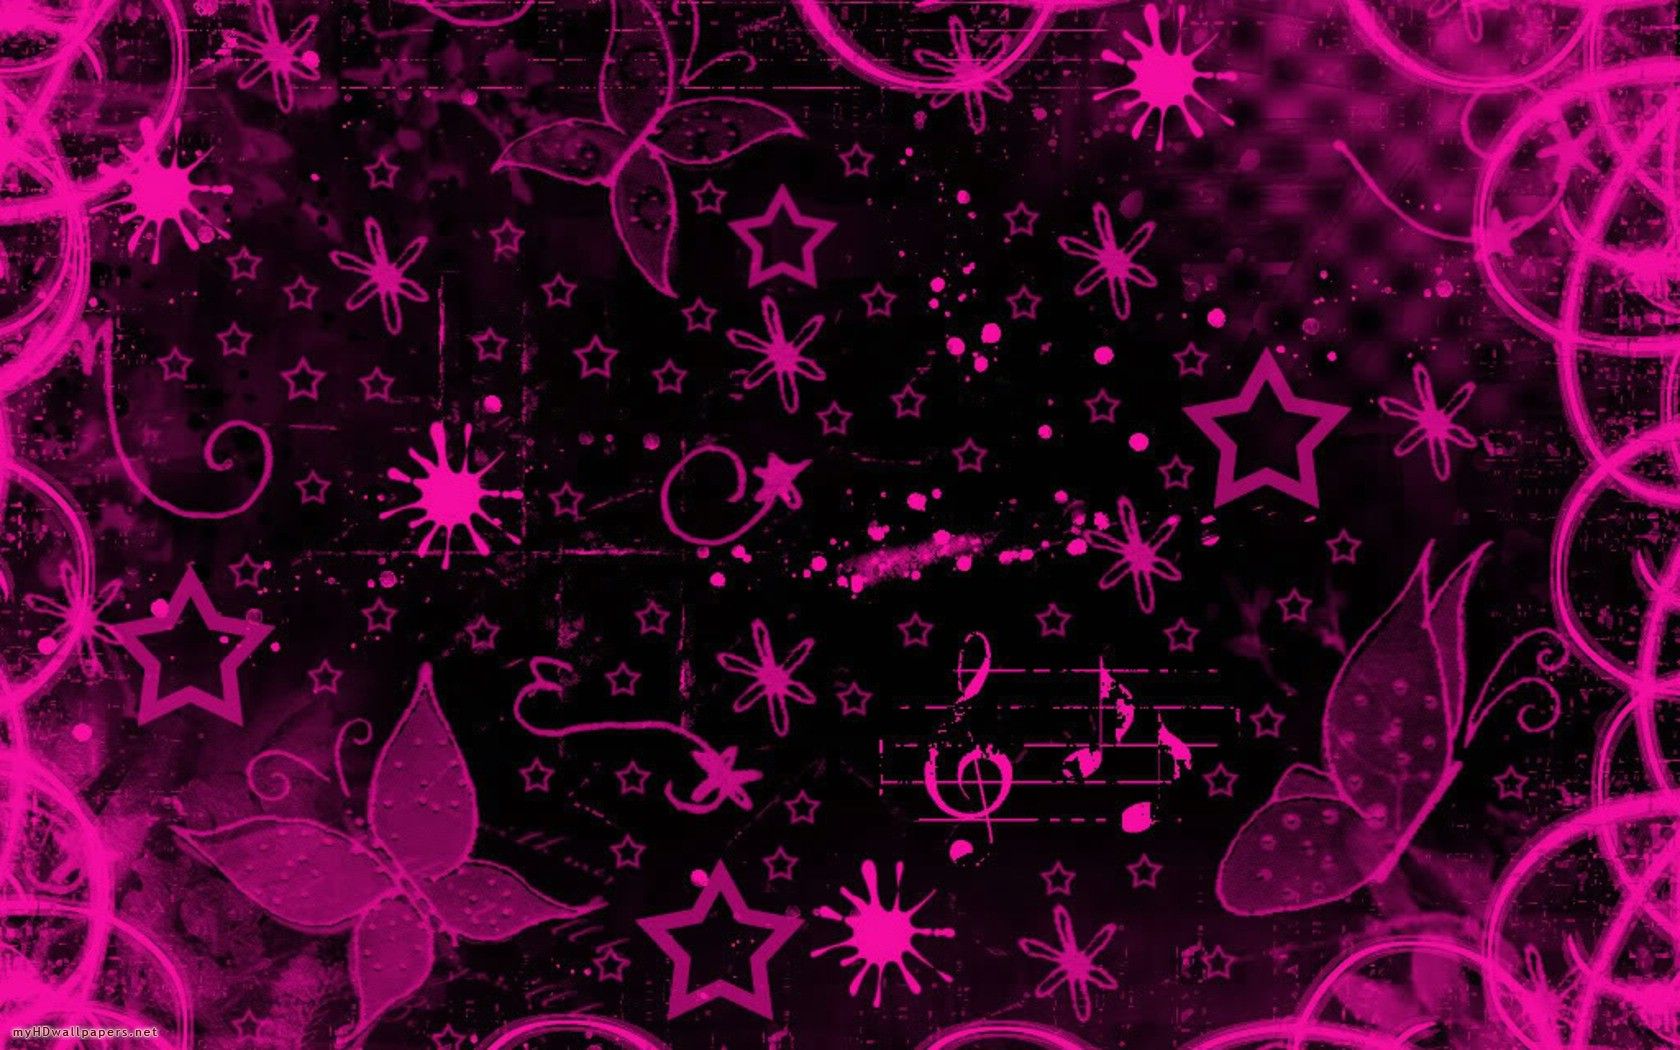 Pink and Black Wallpaper Designs